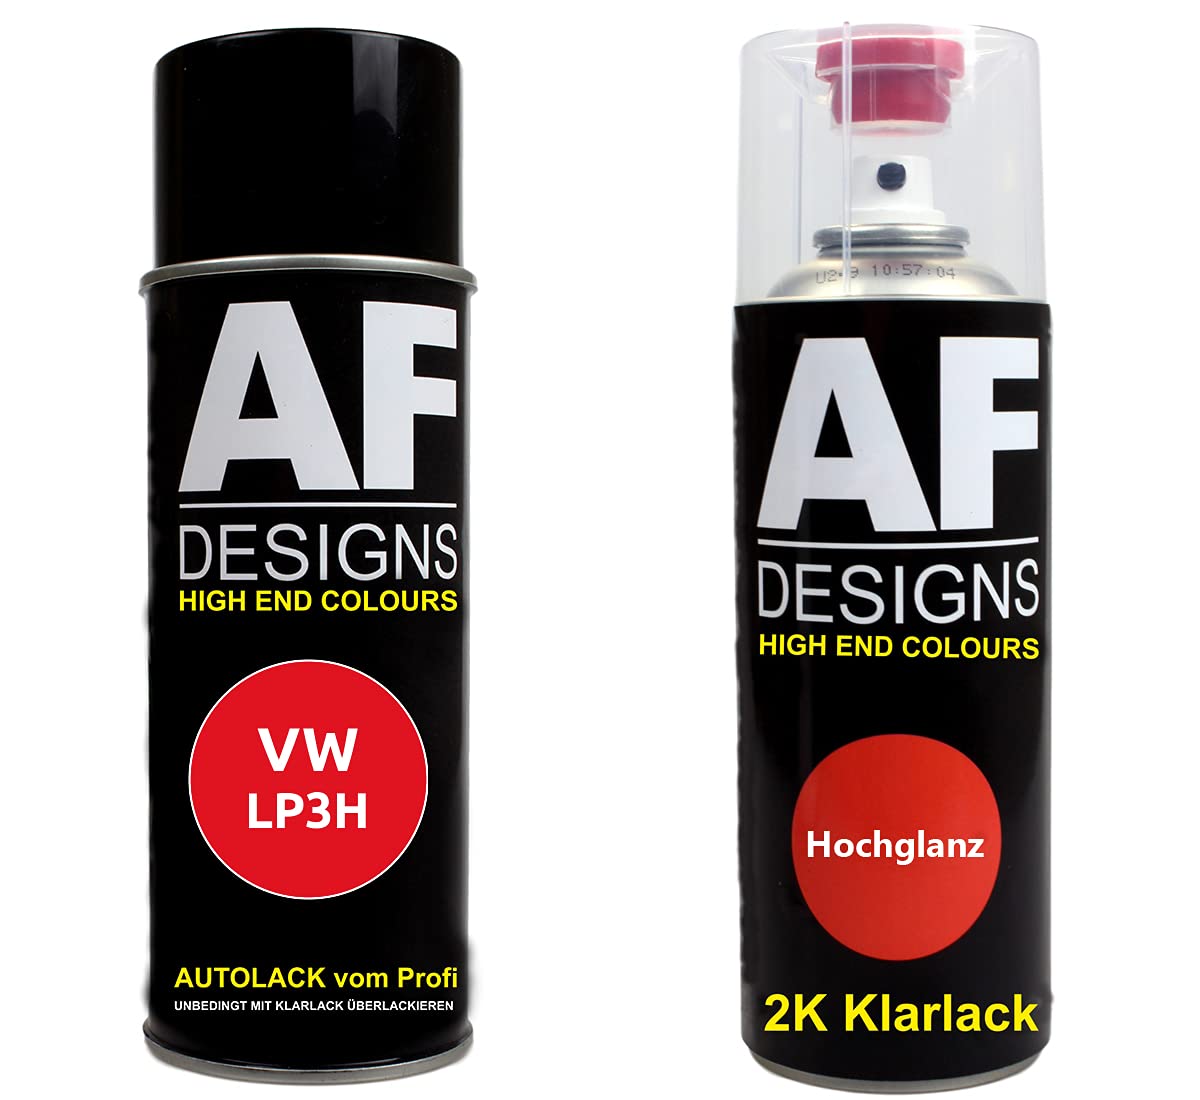 Alex Flittner Designs Autolack Spraydose Set für VW LP3H Marsrot 2K Klarlack Basislack Sprühdose Spraydosen 2x400ml von Alex Flittner Designs